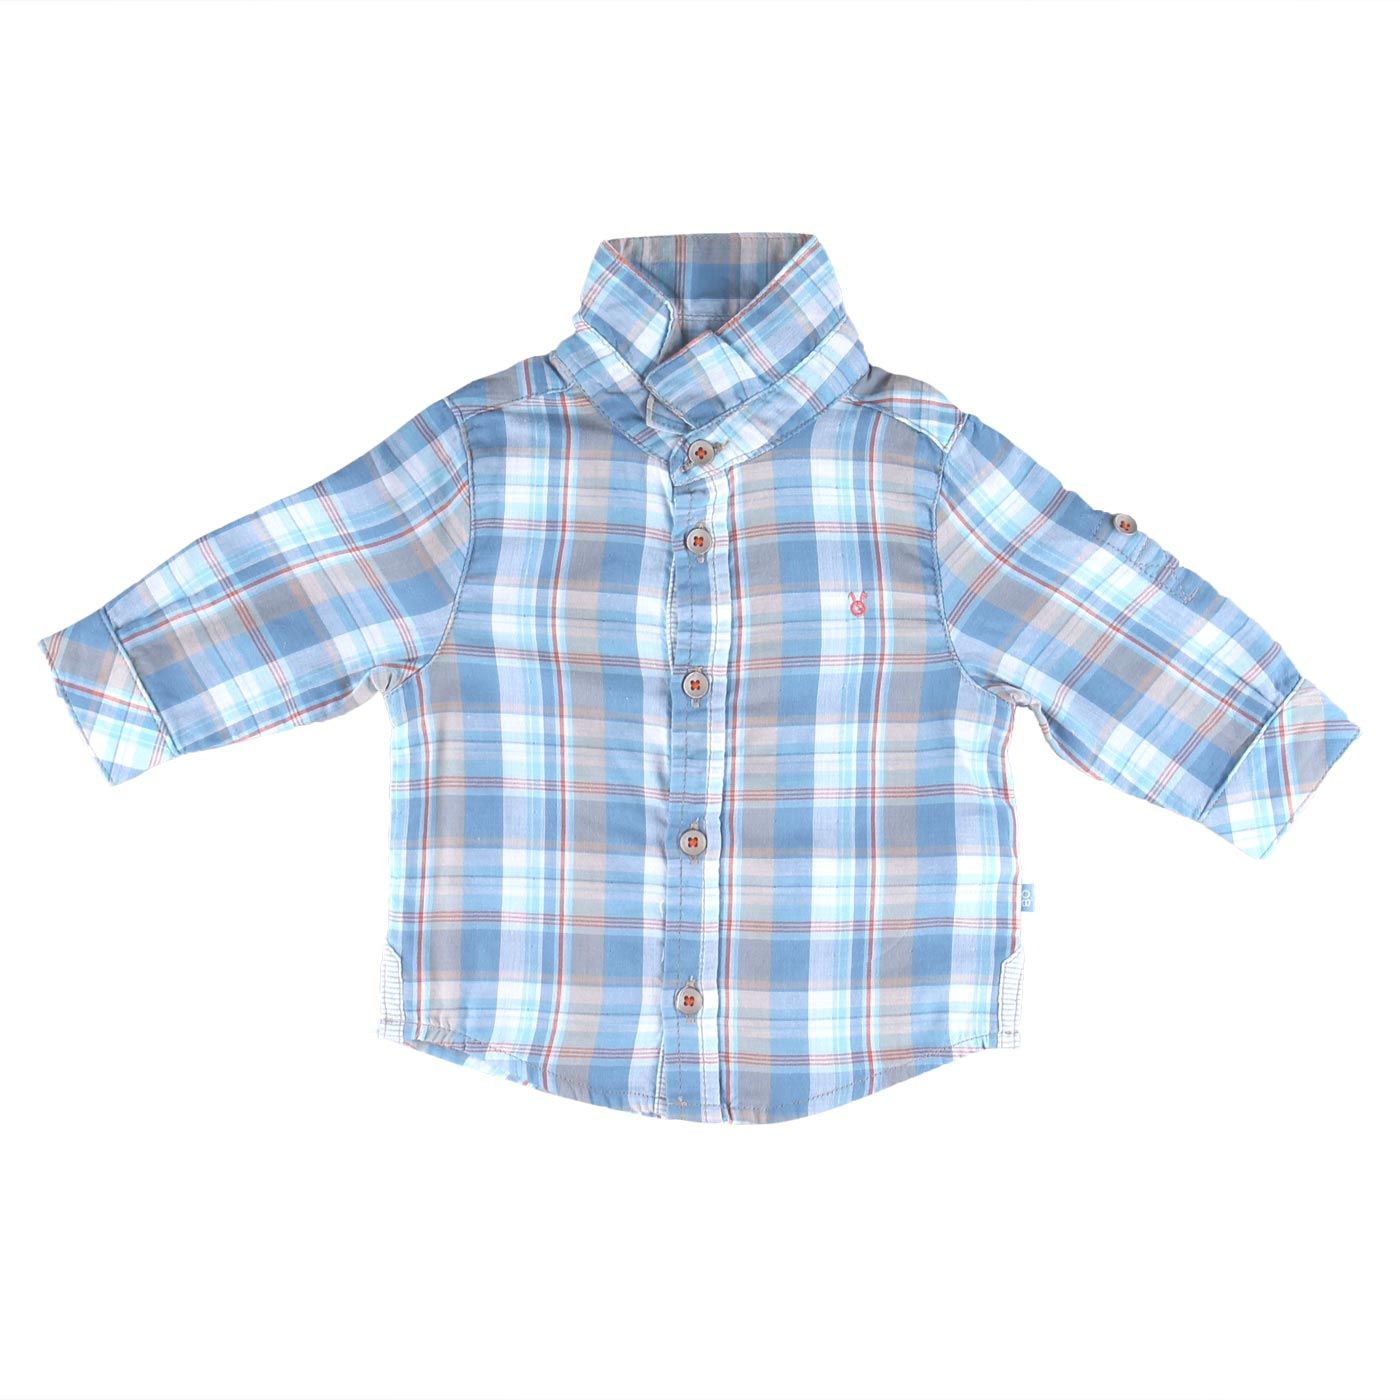 Kiddiewear Shirt Plaid Blue Gray-3M - 1